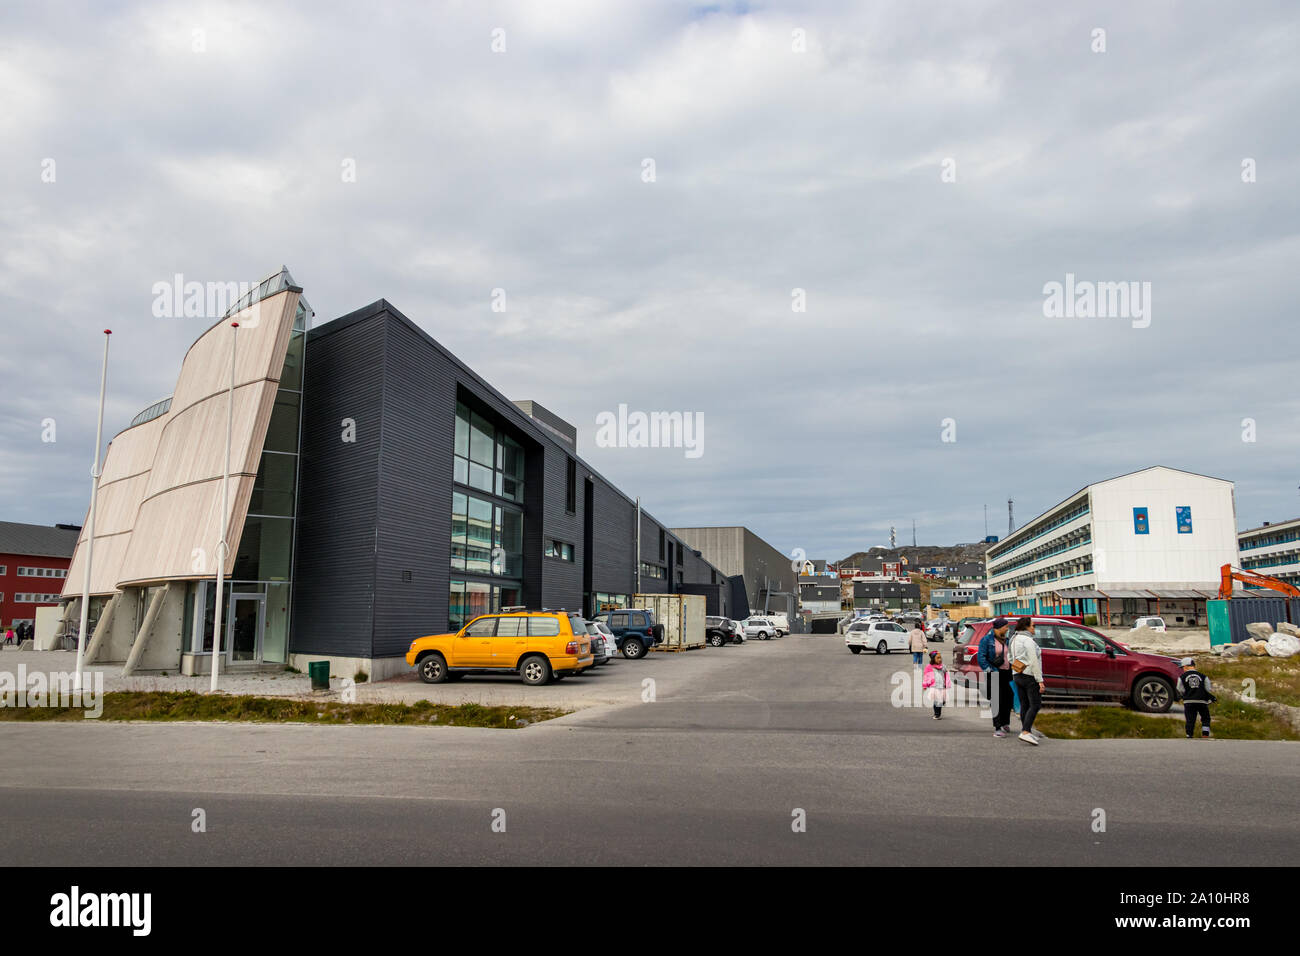 Panoramic view the cultural center Katuak in Inspektorbakken street, Nuuk, Greenland. Stock Photo